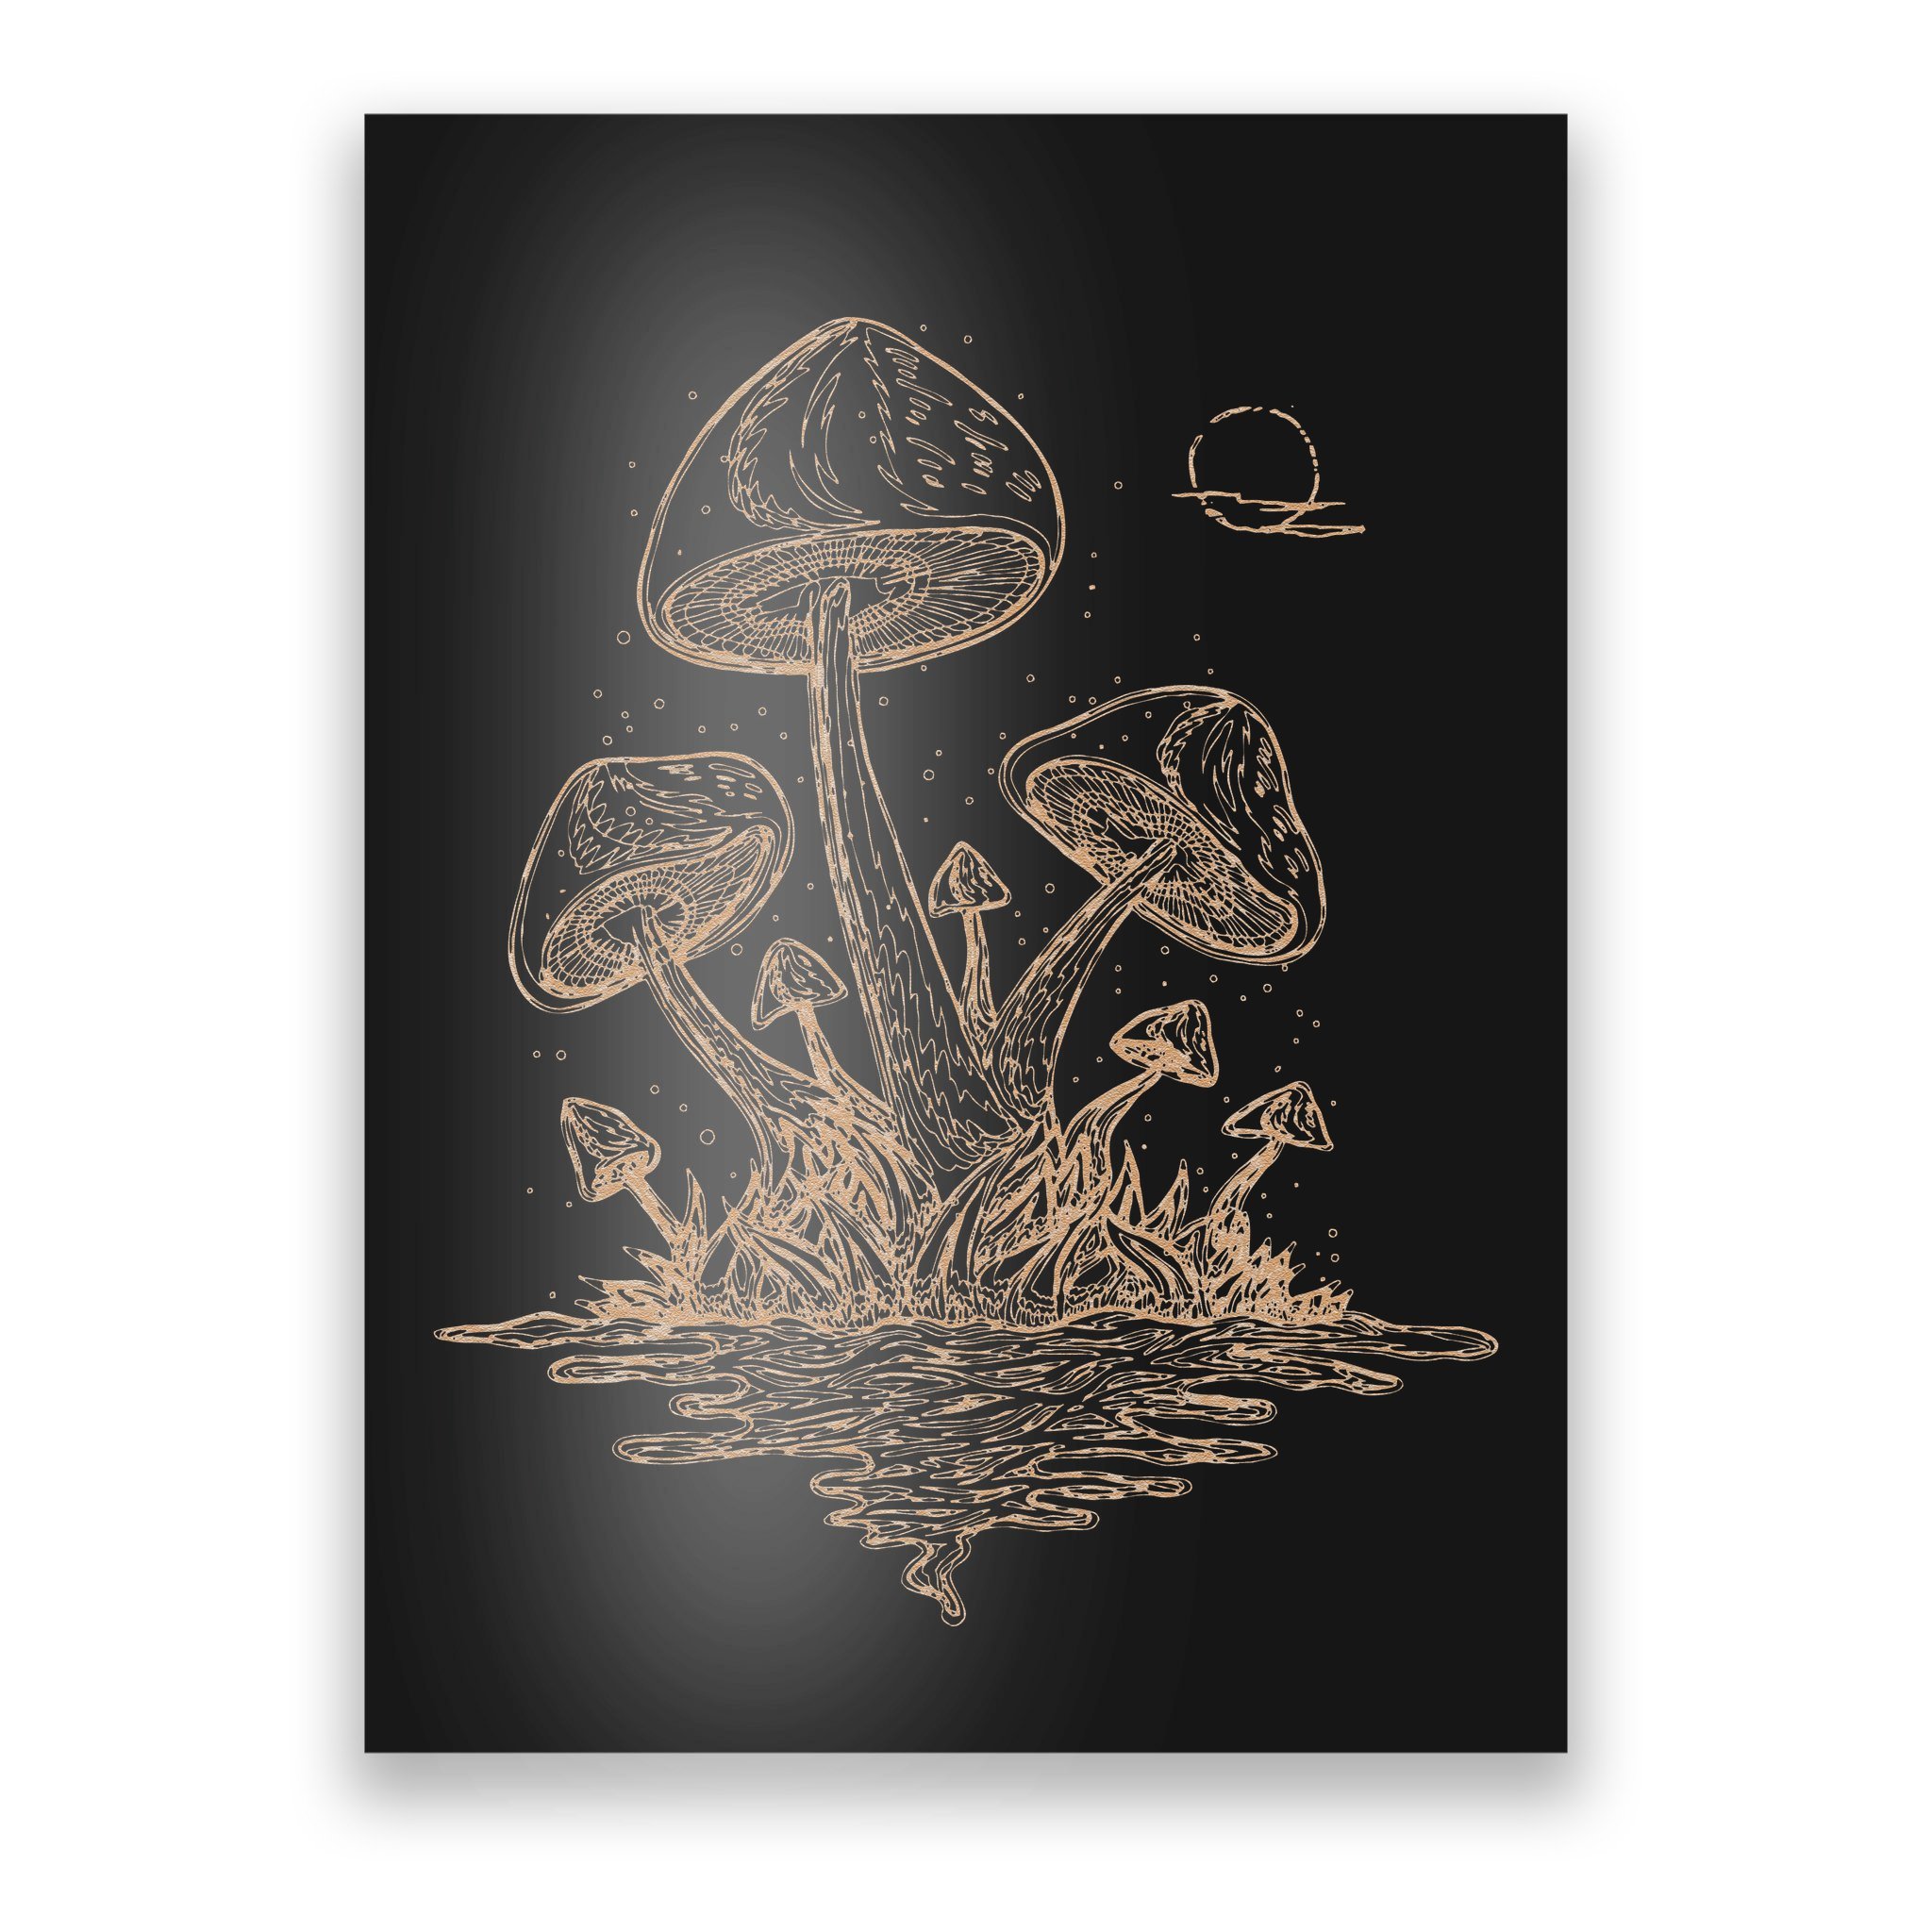 A ceramic mushrooms paintpalette, or trinket dish:) : r/goblincore